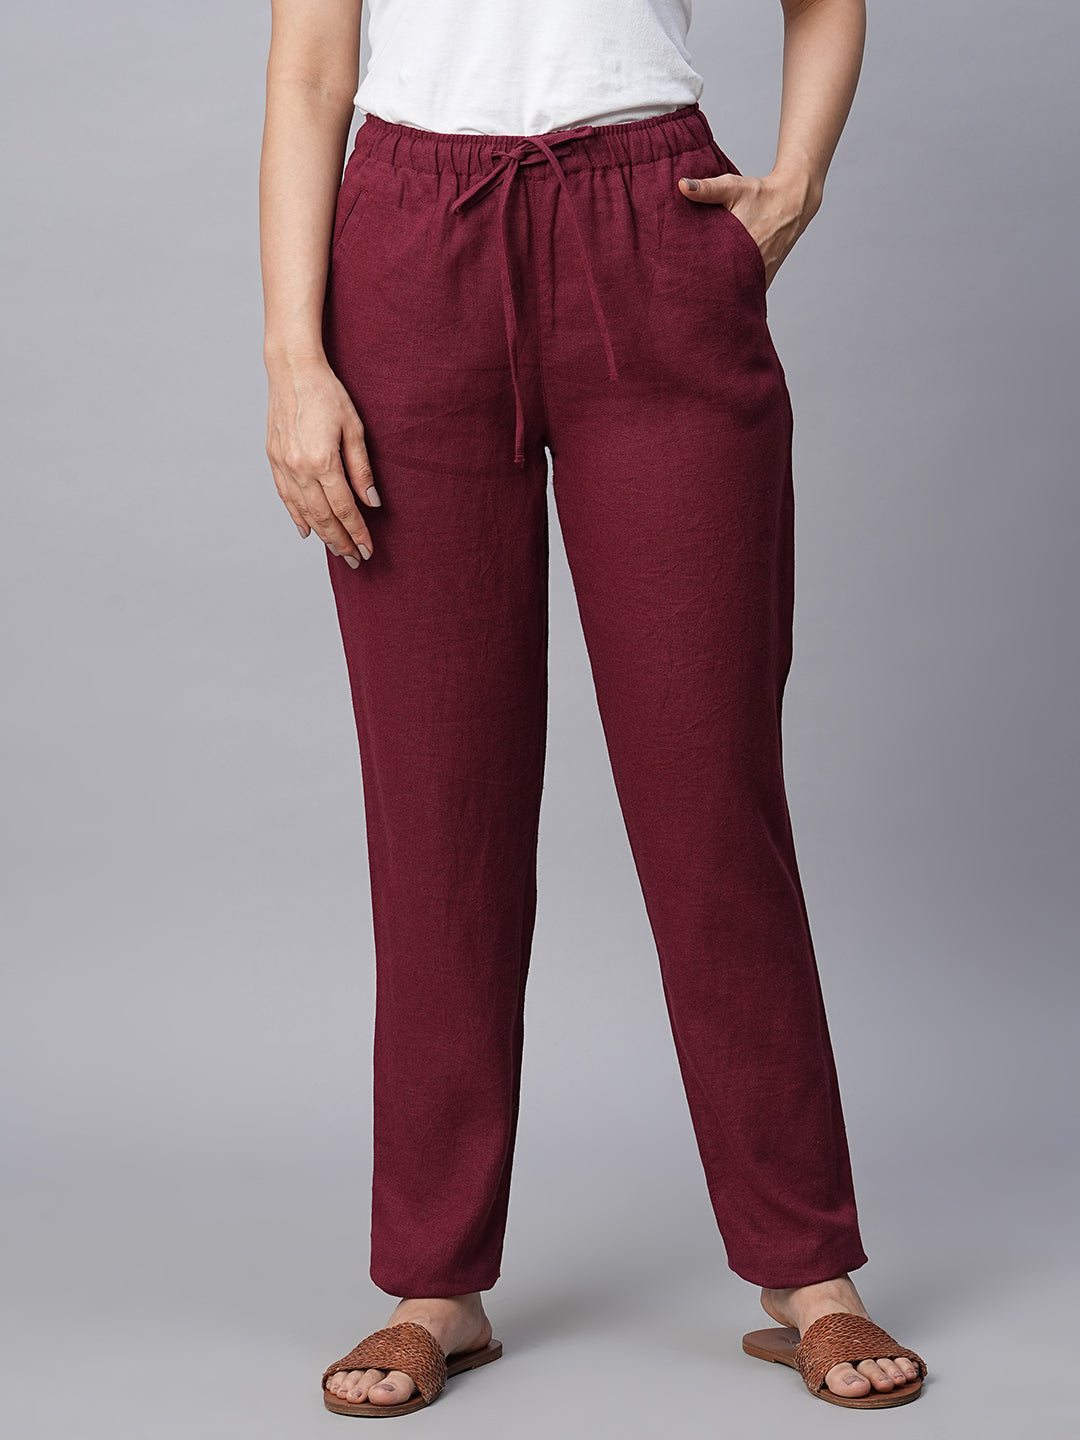 Women's Linen Viscose Maroon/Red Regular Fit Pant